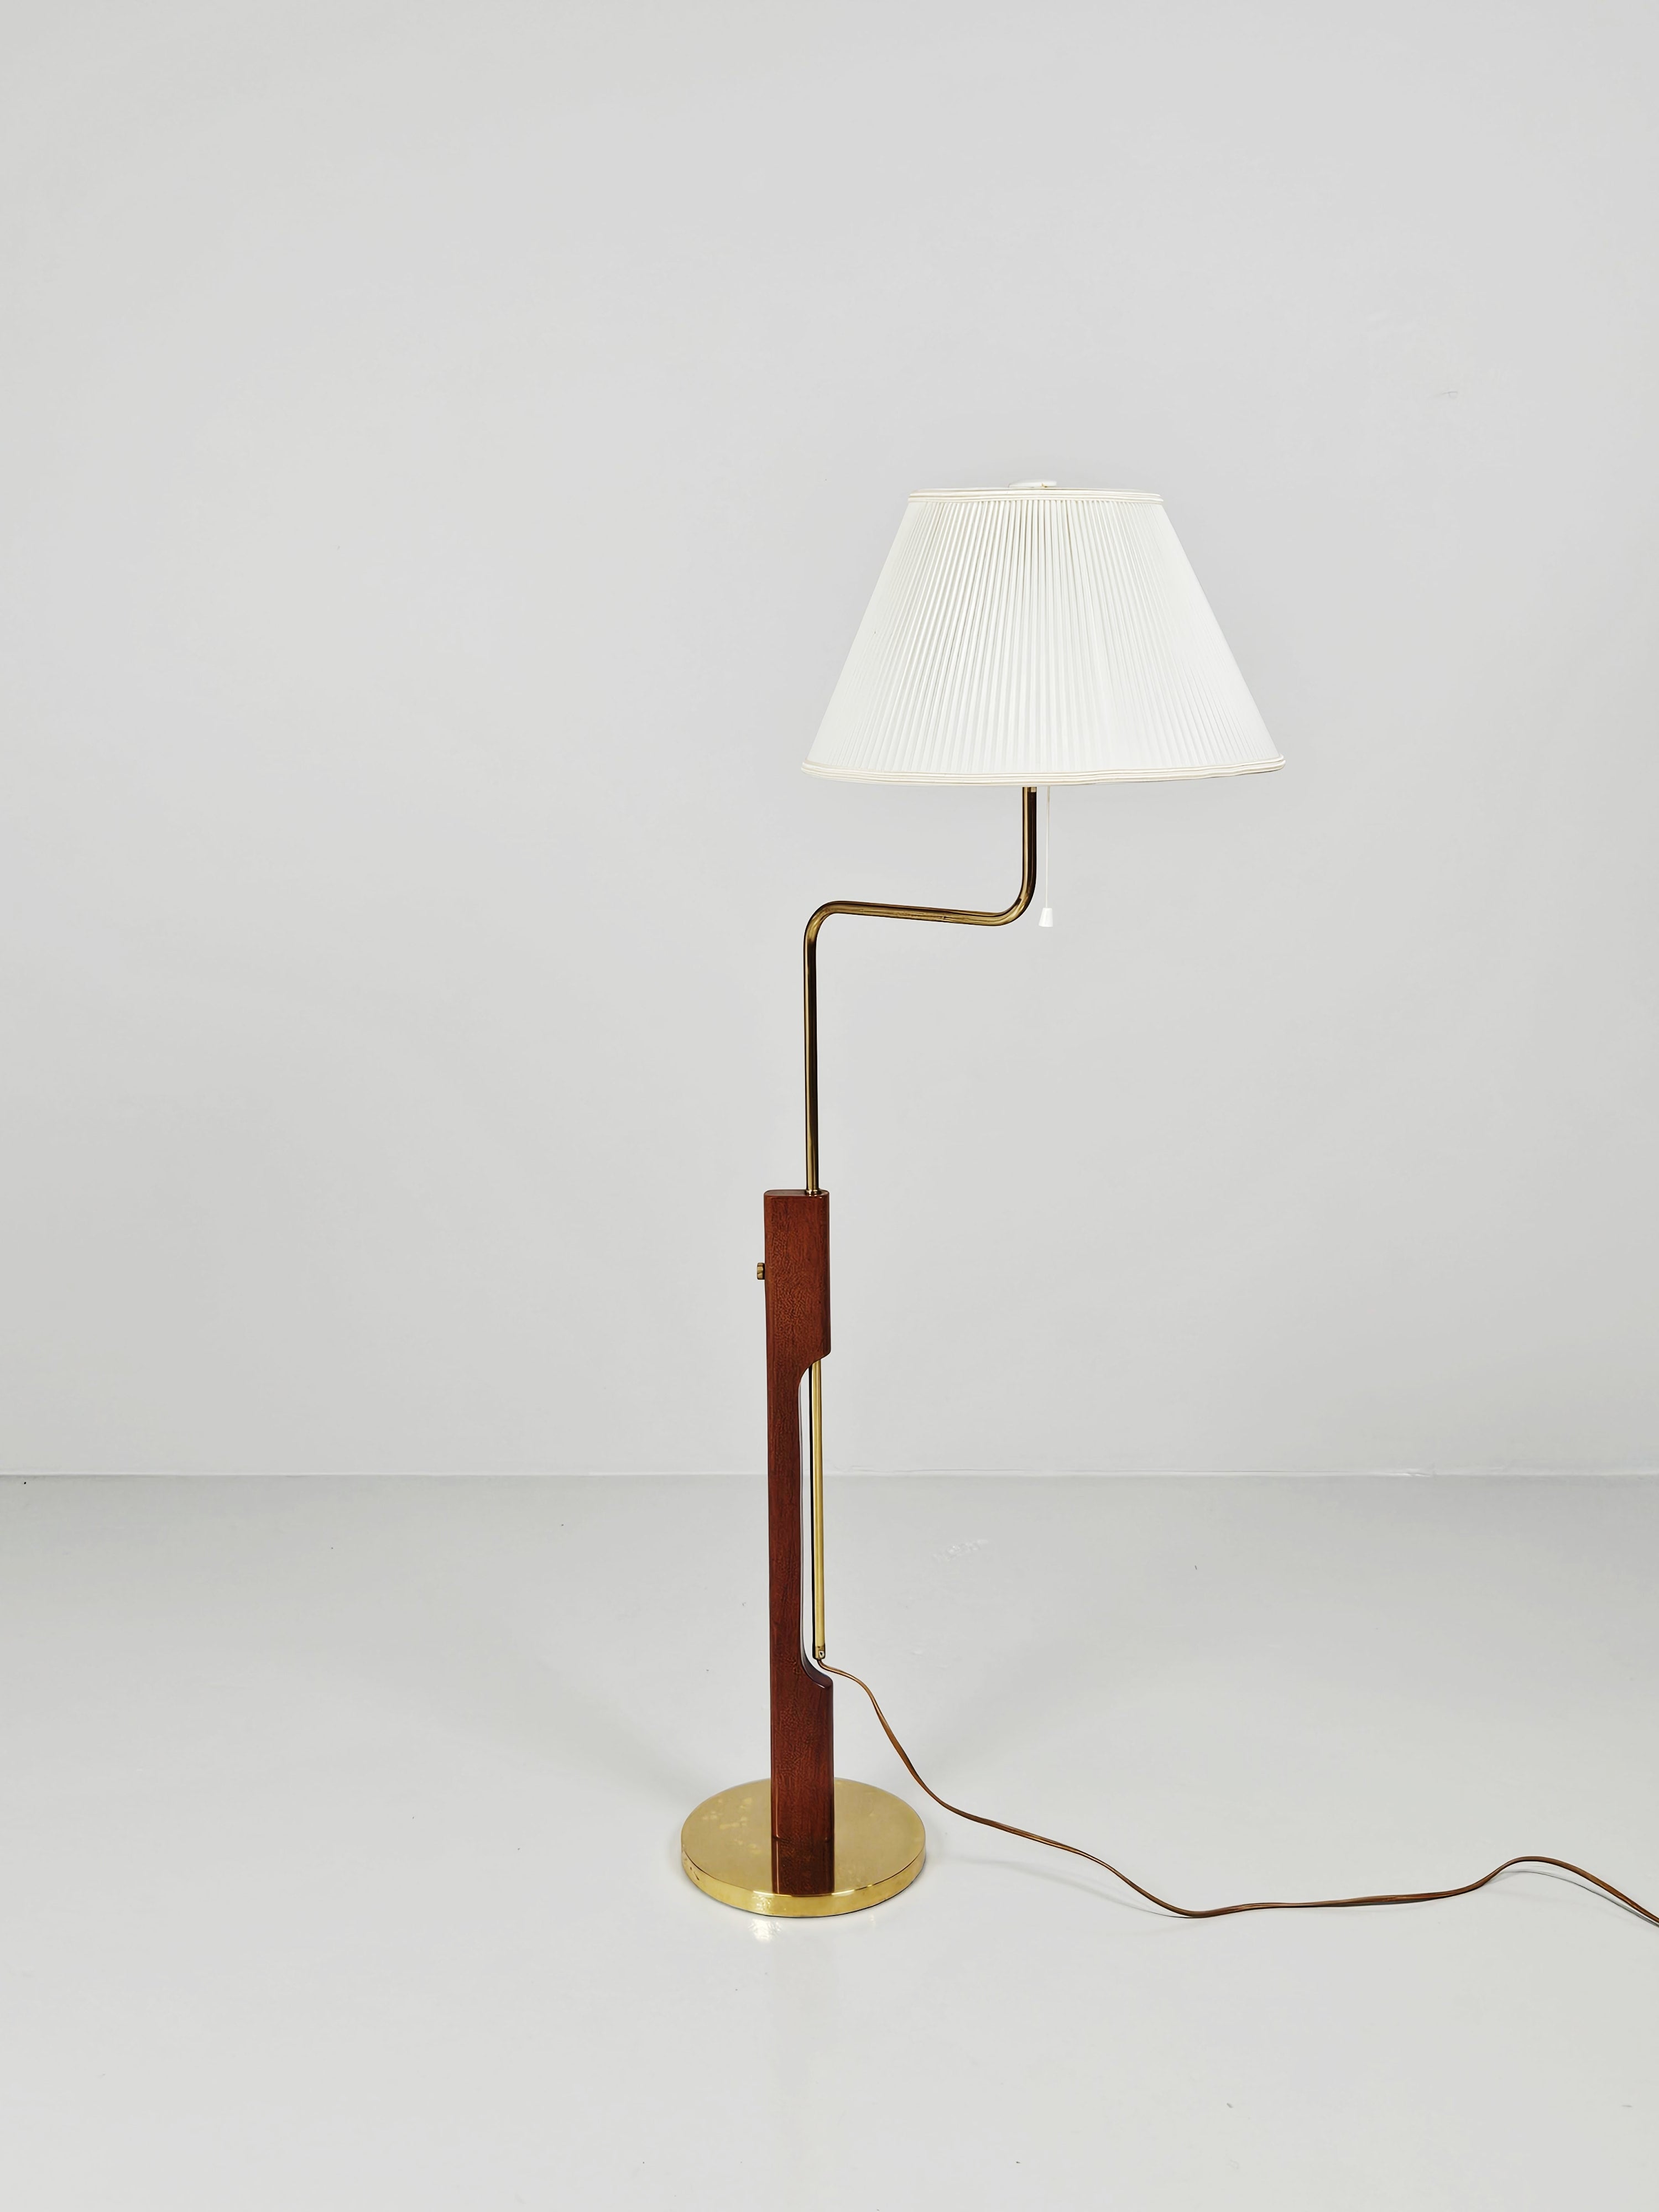 Adjustable floor lamp by Bergboms, model G-82A, teak and brass, Sweden, 1960s For Sale